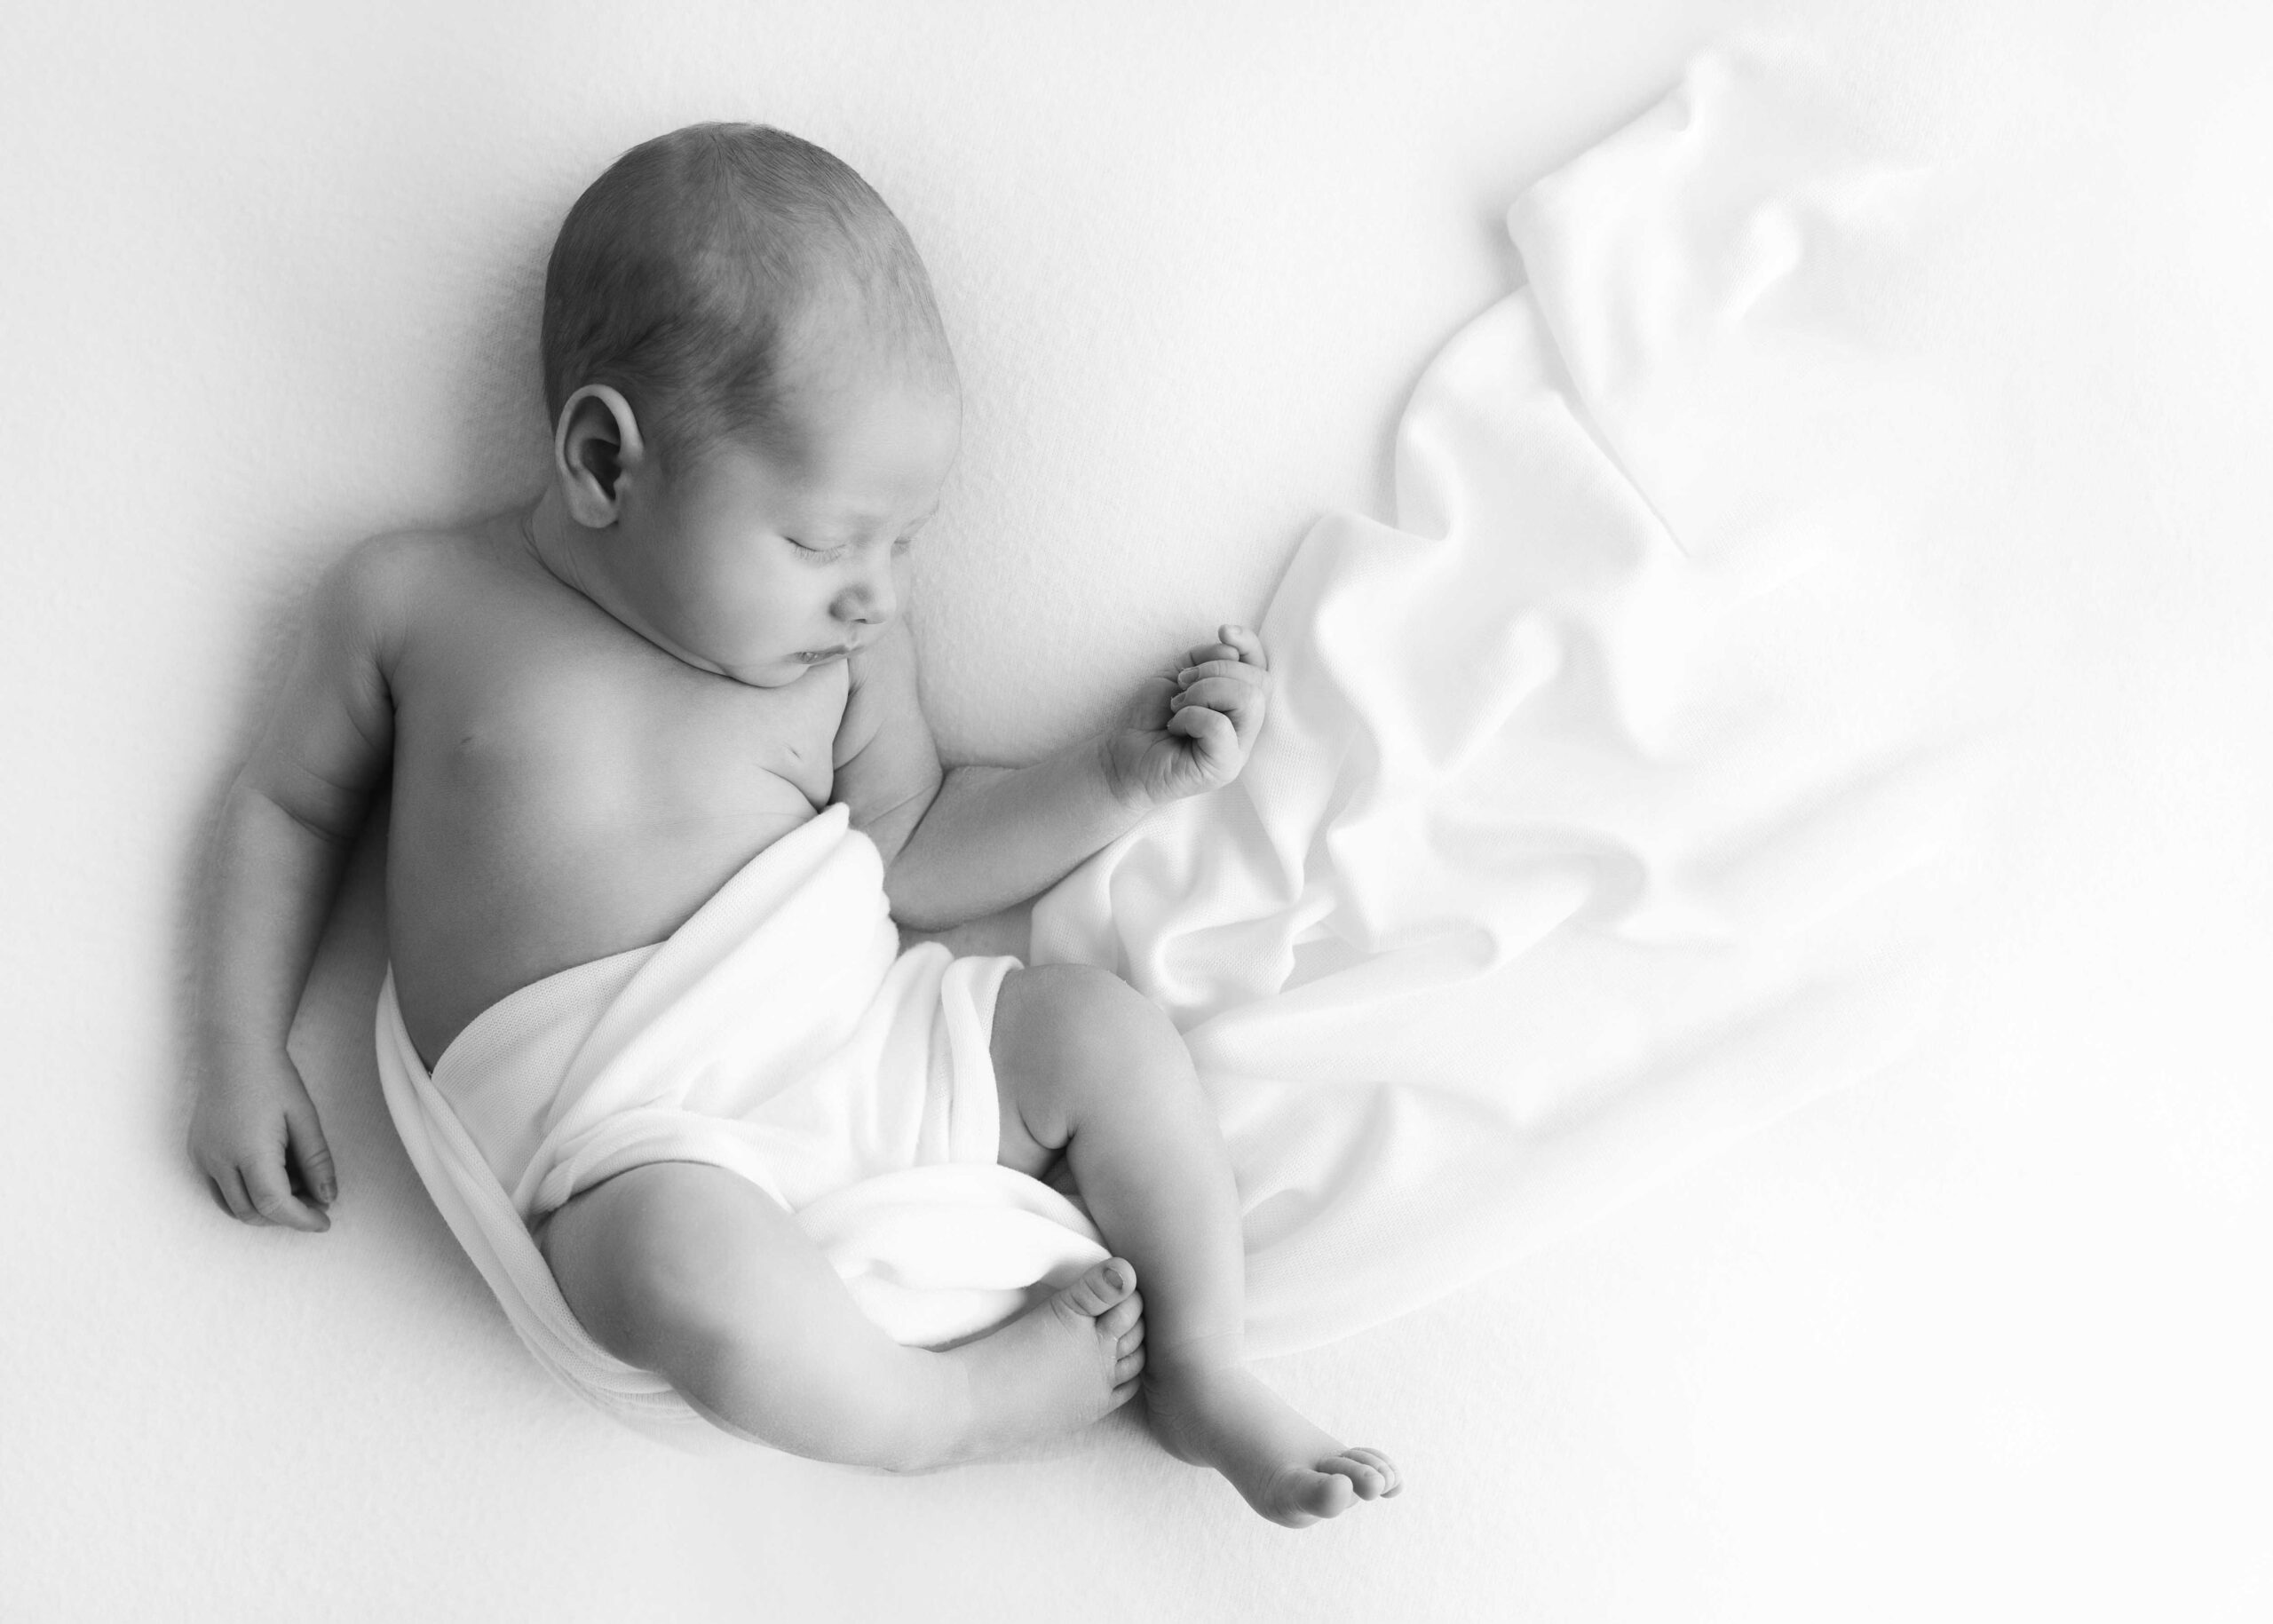 newborn baby with white blanket trailing around him as he sleeps by best newborn photographer in dallas